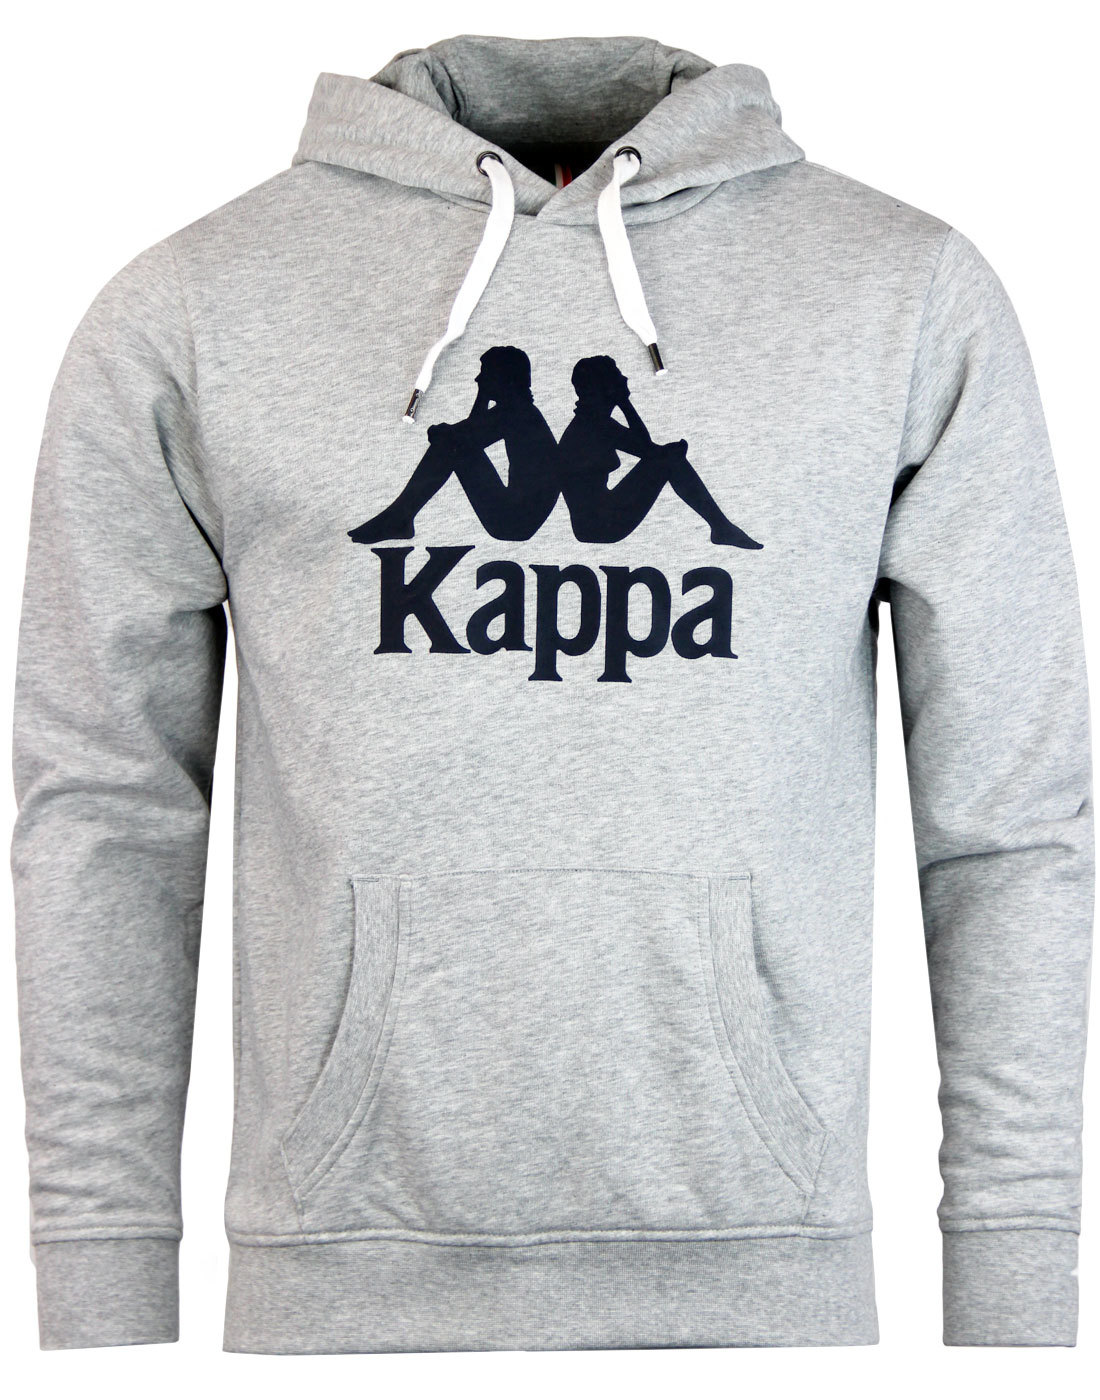 KAPPA Loftus Retro 1970s Indie Omni Logo Hooded Sweatshirt Grey